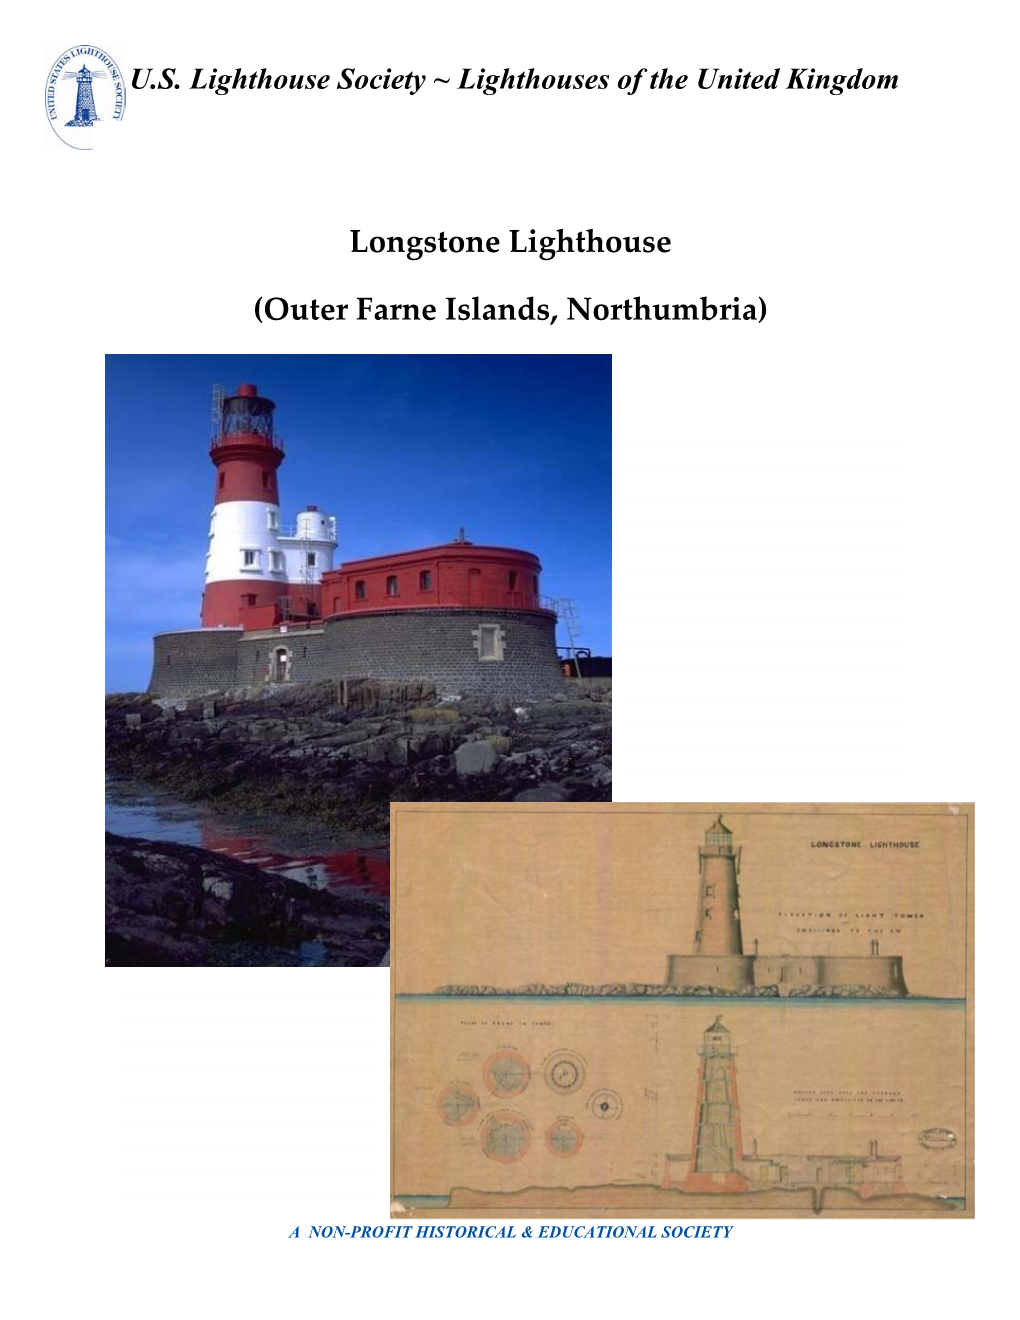 Longstone Lighthouse, Outer Farne Islands